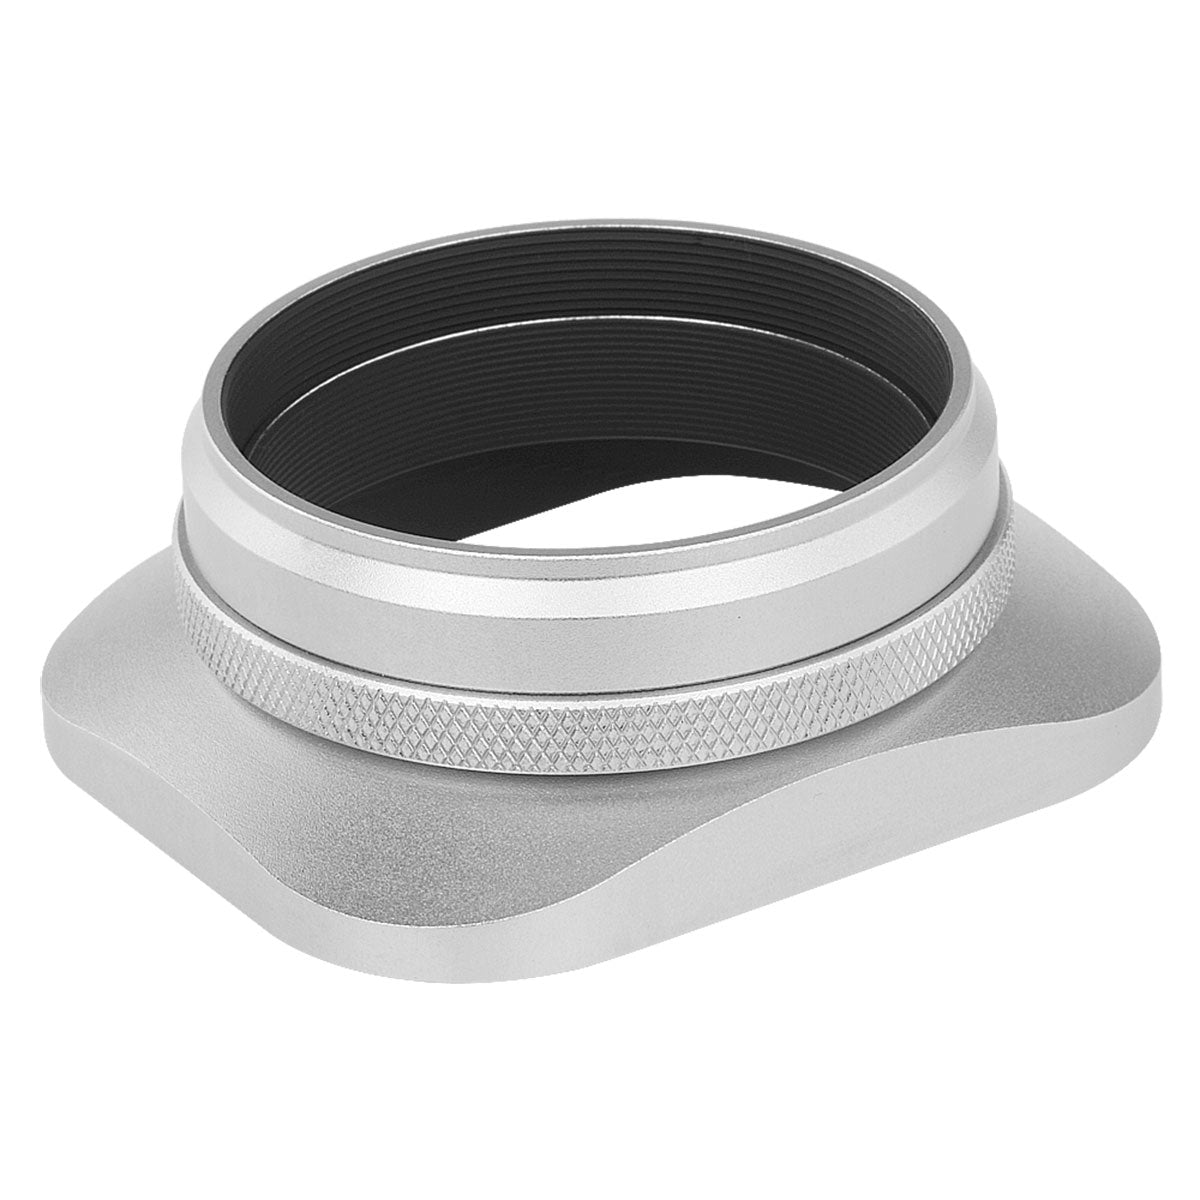 Haoge LH-EW3 Square Metal Lens Hood with 49mm Adapter Ring with Cap for Fujifilm Fuji FinePix X100 X100S X100T X100F X70 X100V X100VI Camera Replaces Fujifilm LH-X100 AR-X100 LH-X70 Silver